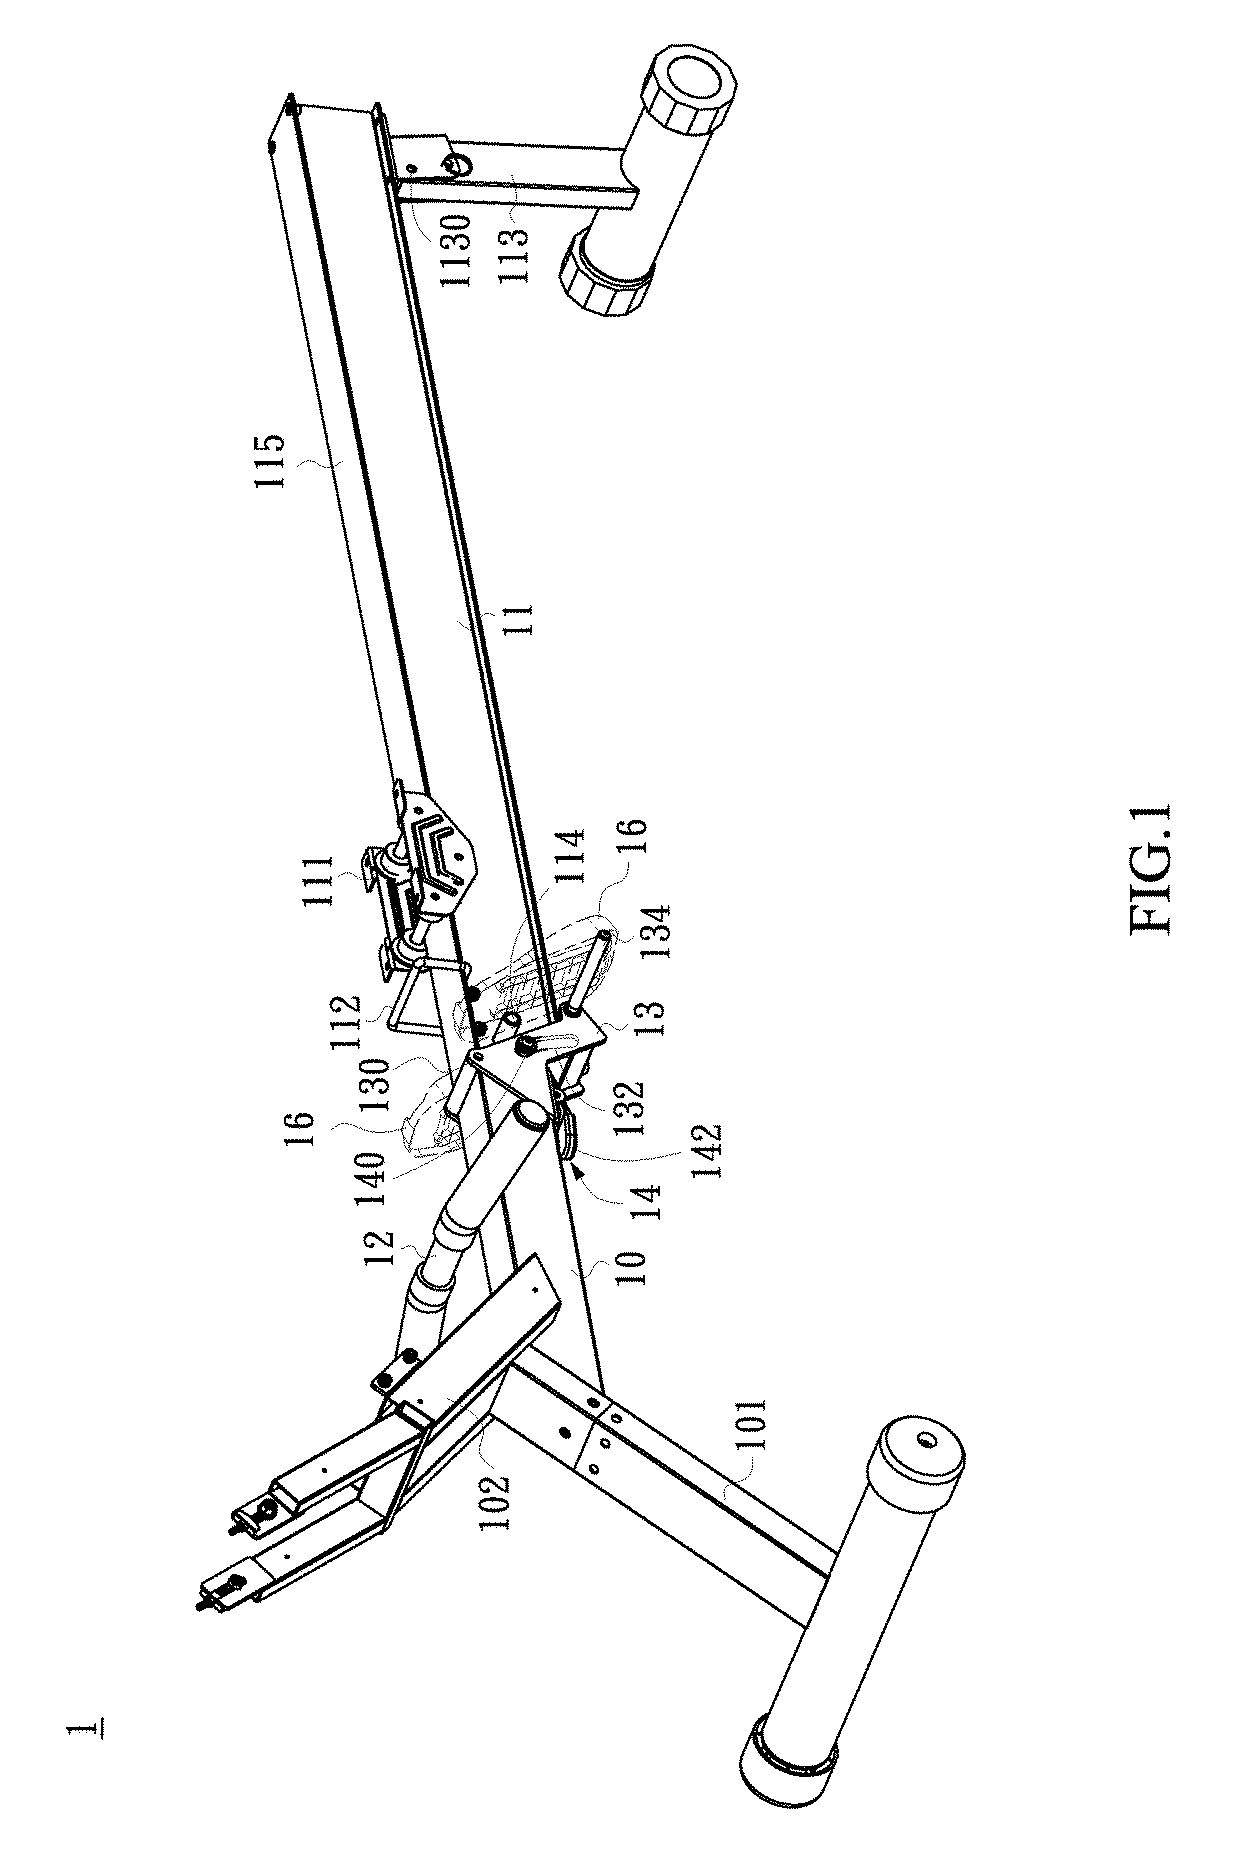 Folding mechanism of rowing machine